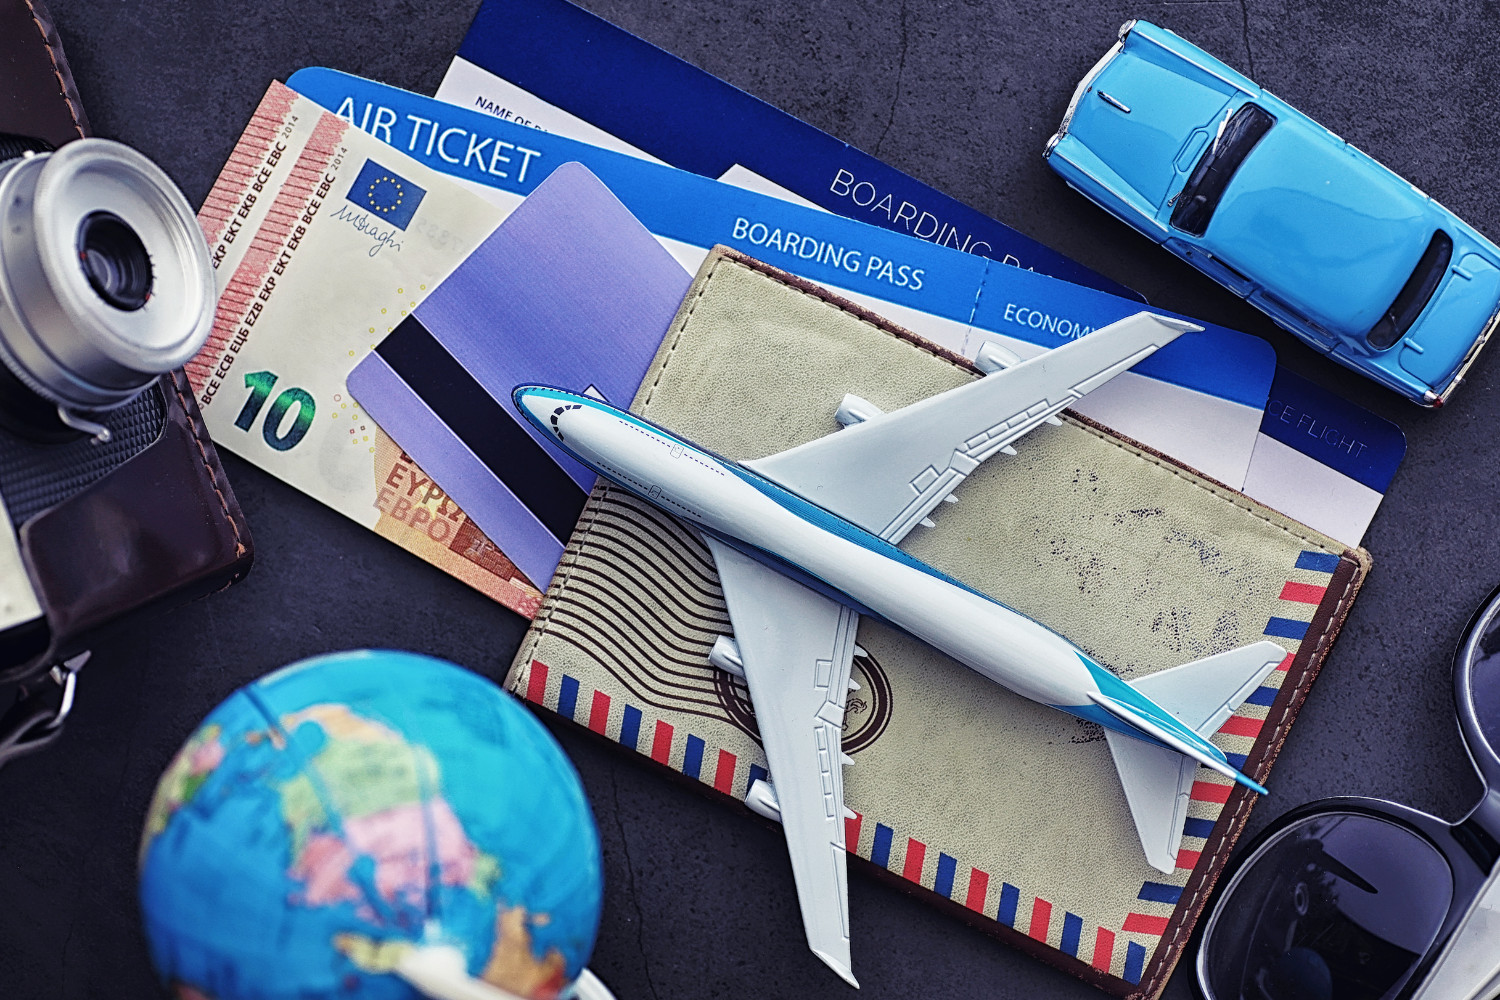 a toy plane, passport , globe, sunglasses, camera, a blue toy car, boarding pass, flight ticket